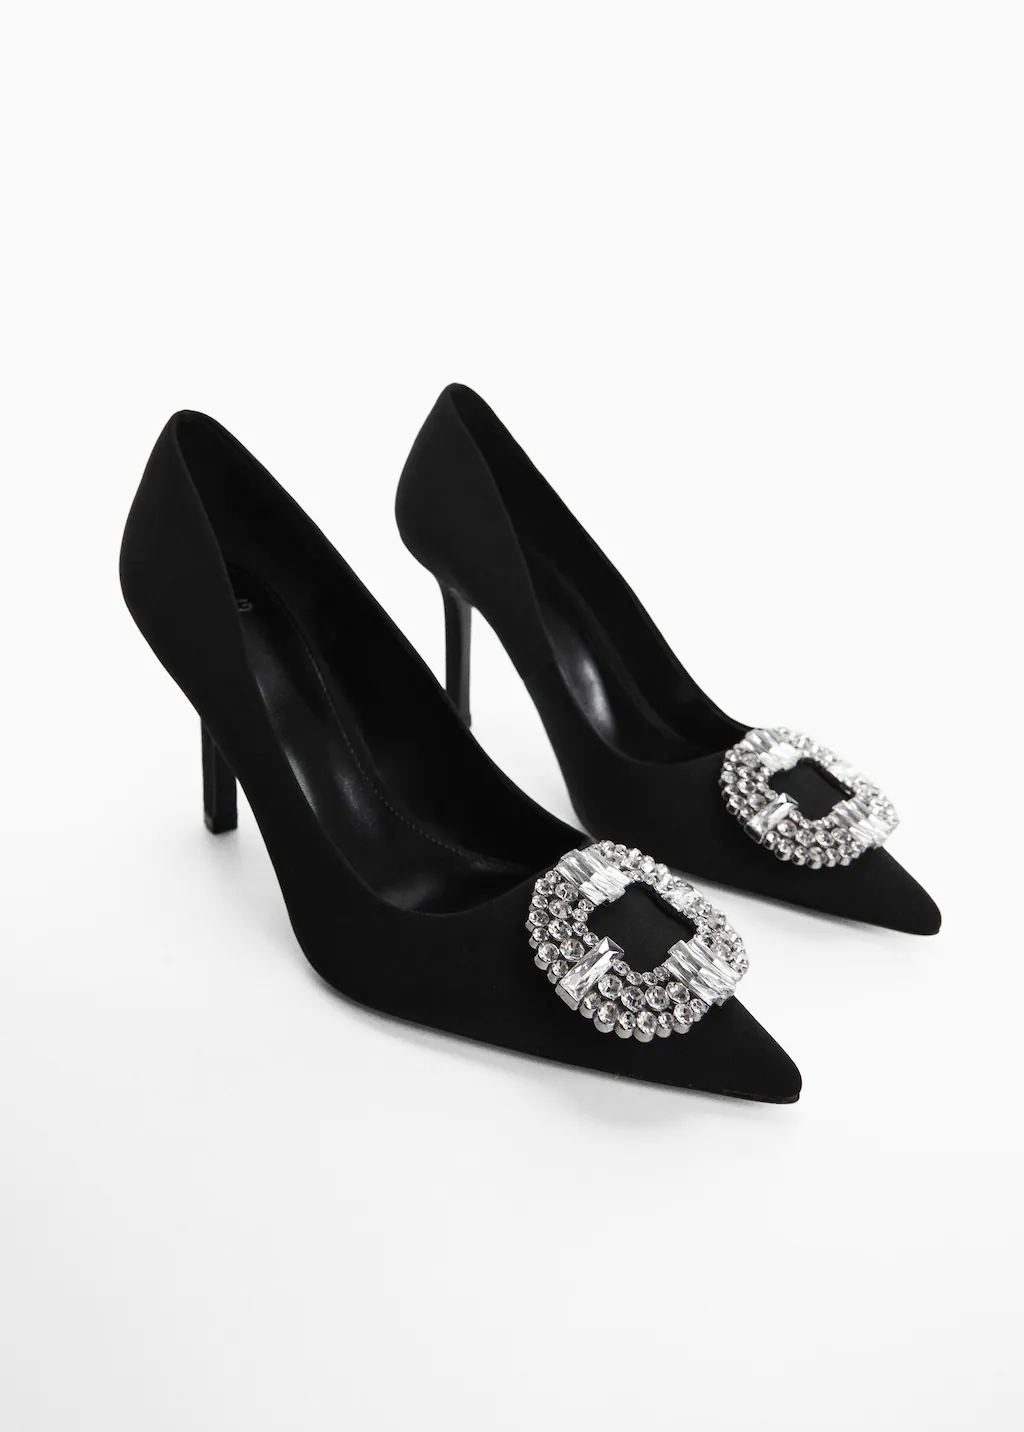 Jewel heel shoesREF. 47000168-DONA-LM Current price £ 59.99 £ 59.99